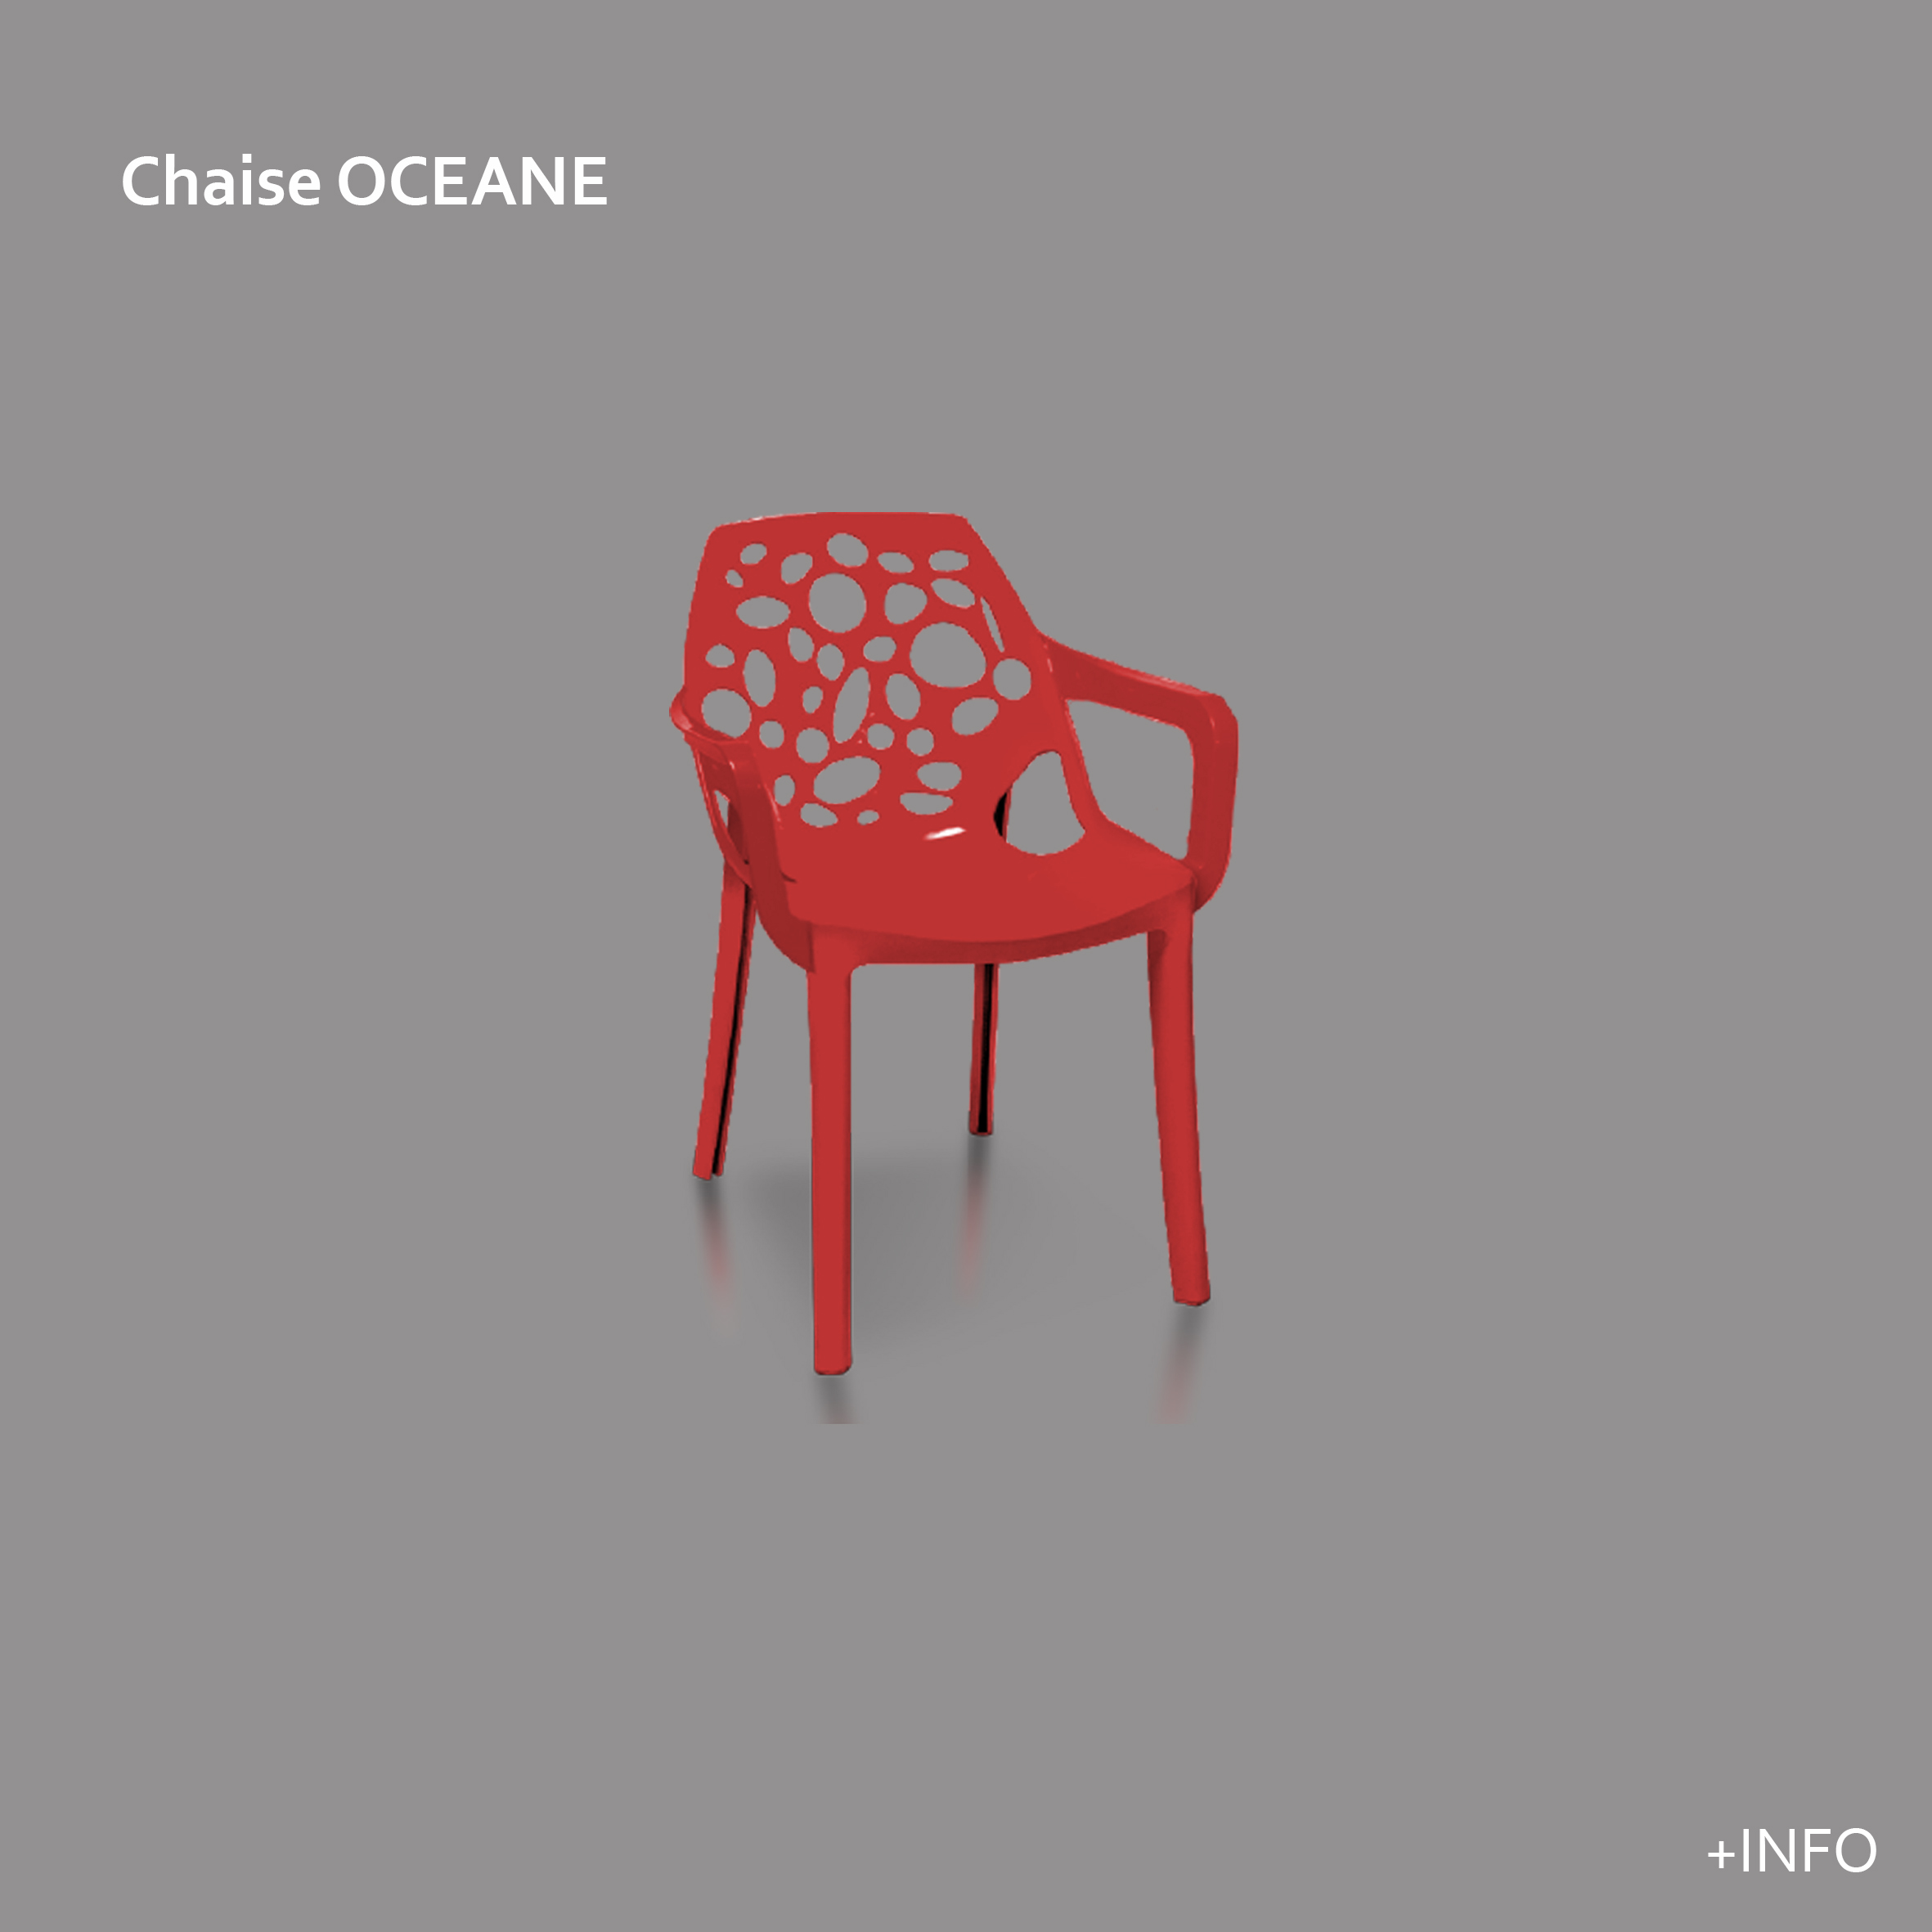 Oceane chaise